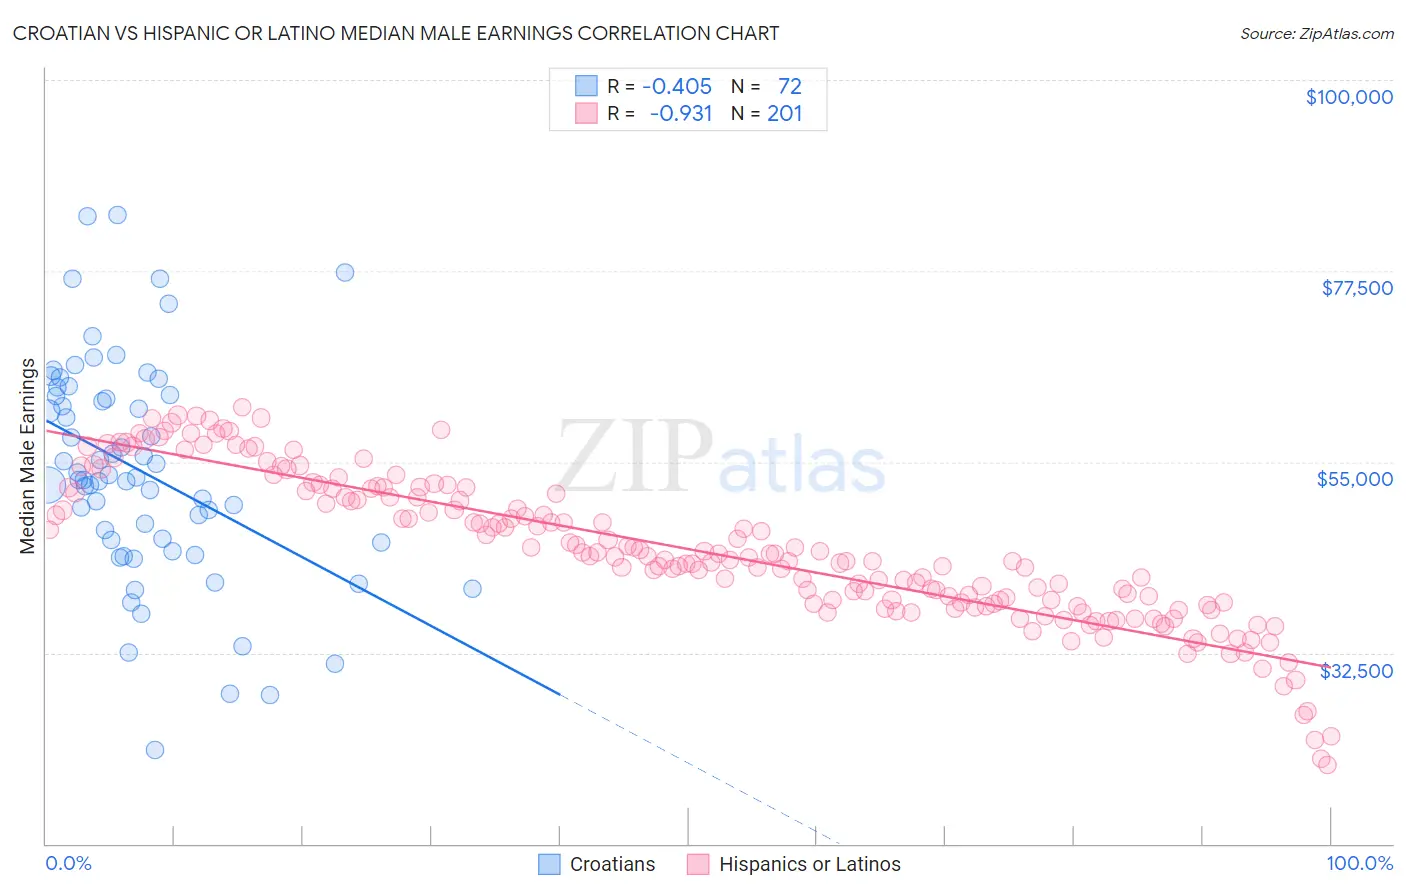 Croatian vs Hispanic or Latino Median Male Earnings